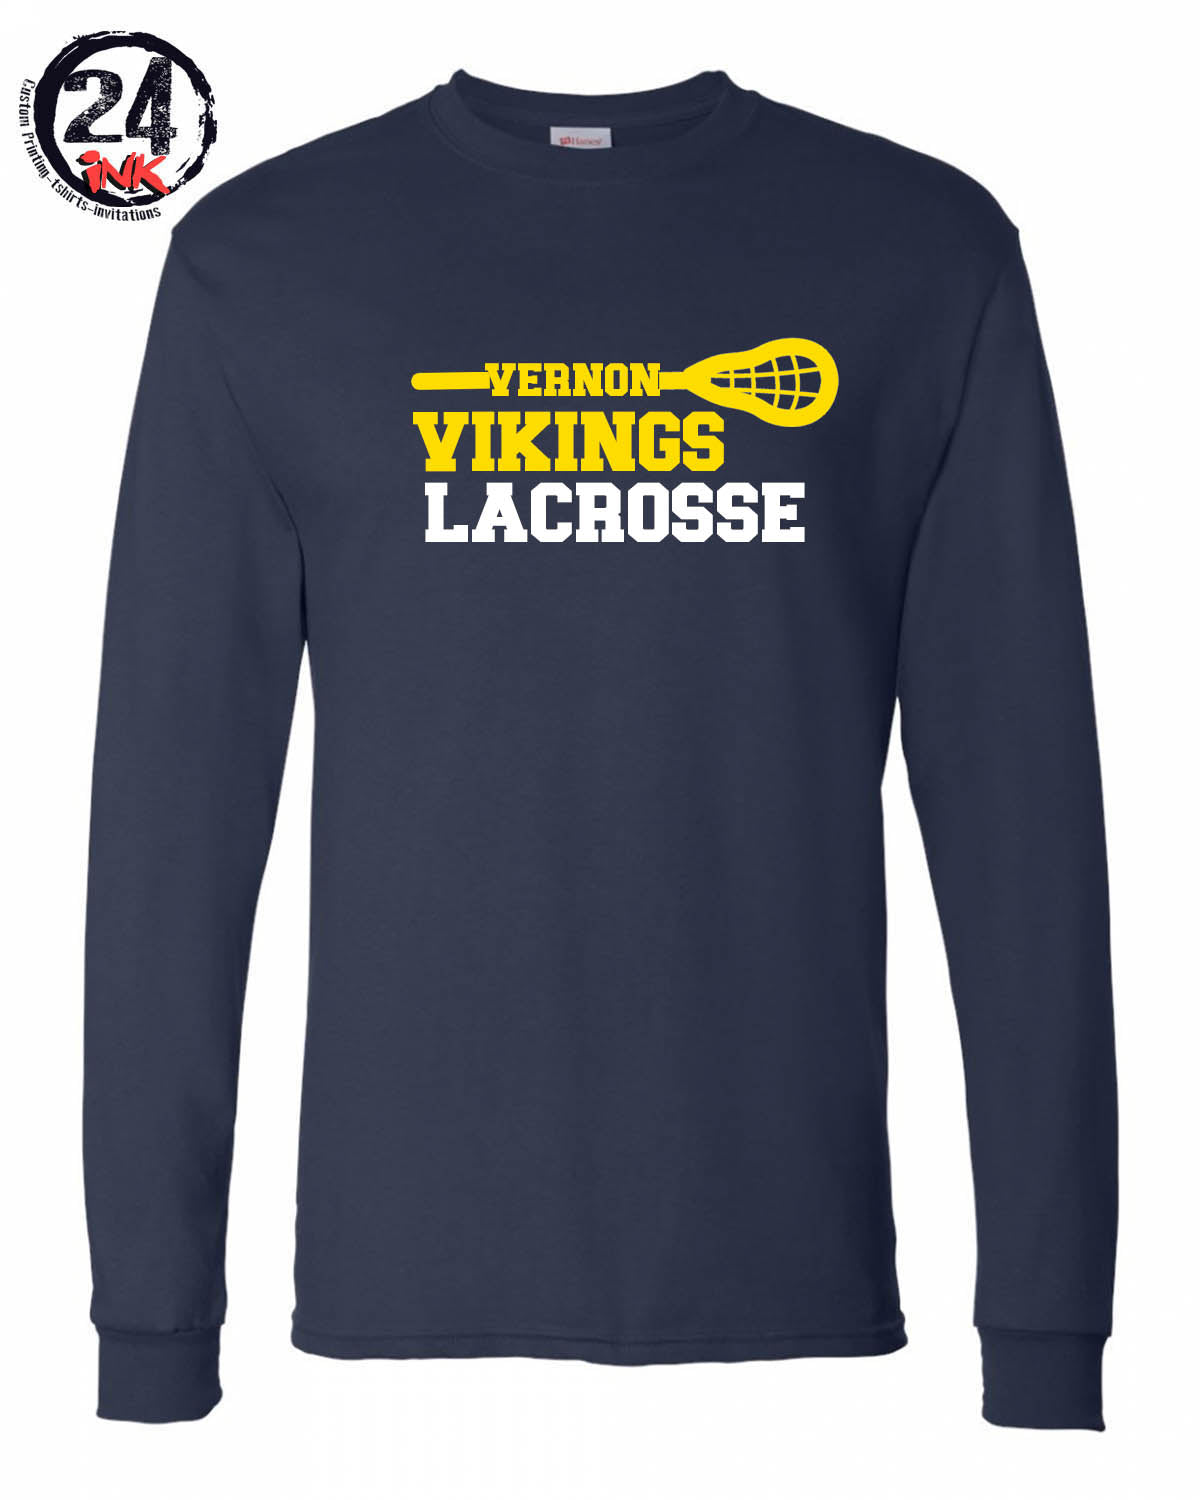 Vernon Vikings Lacrosse Long Sleeve Shirt